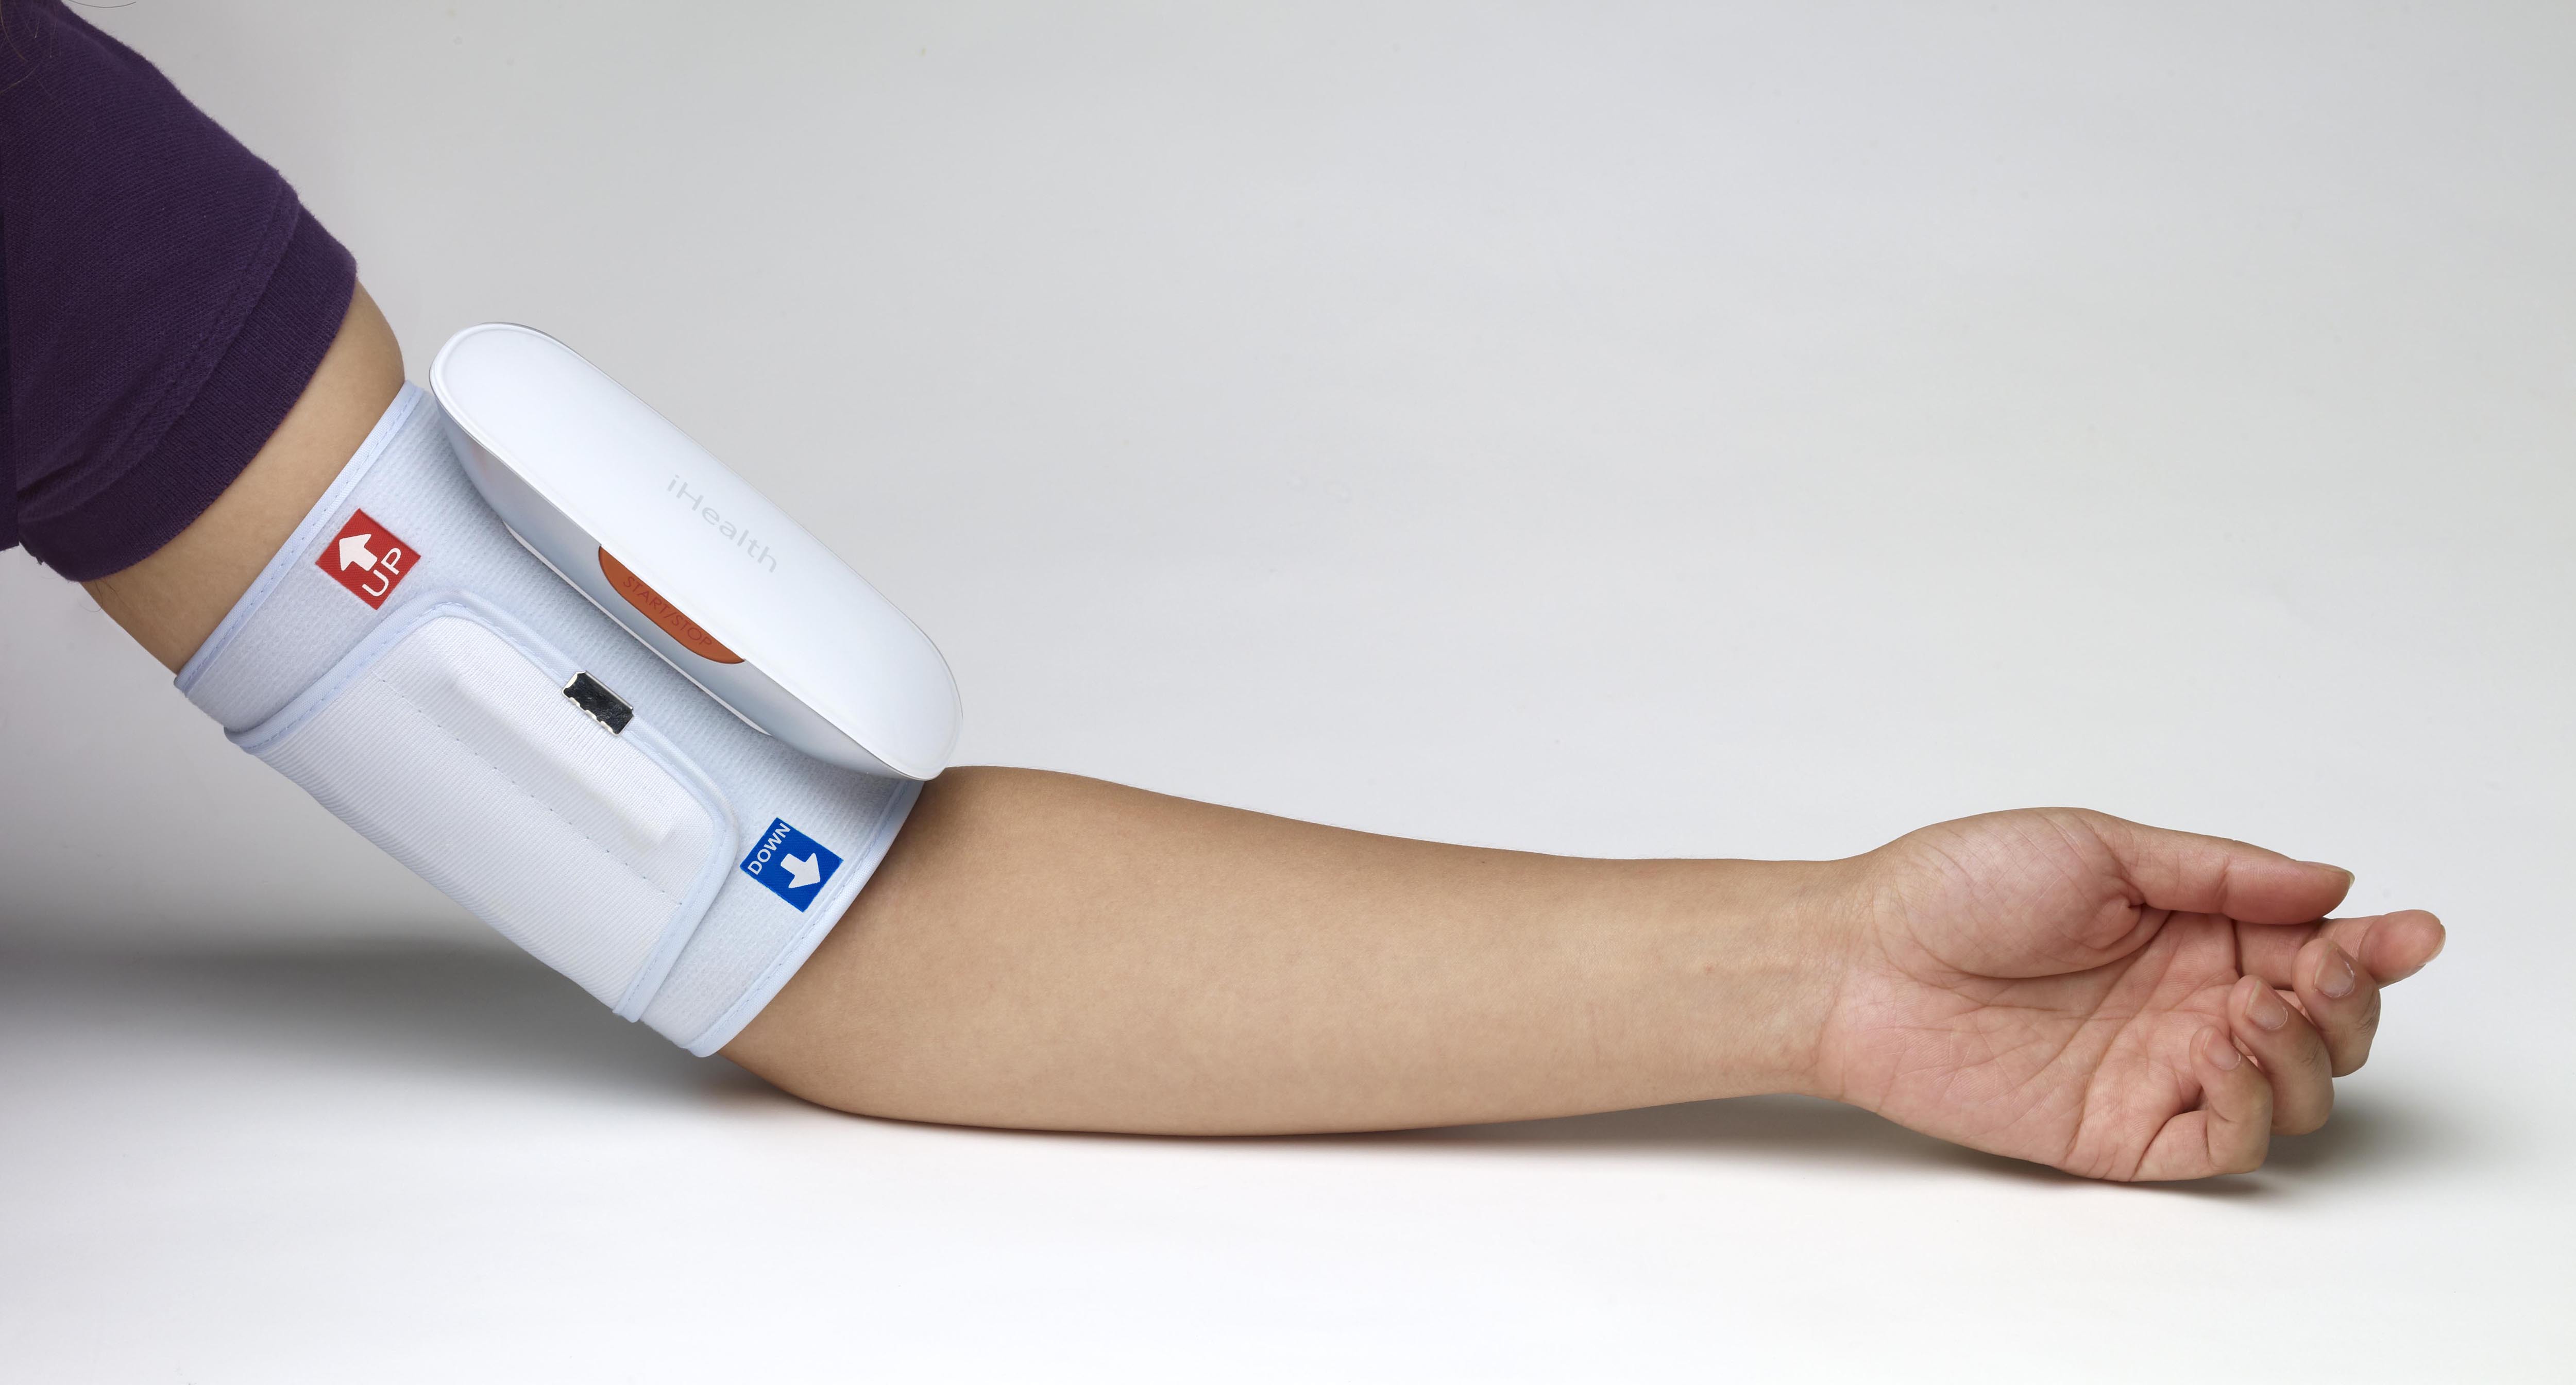 iHealth BP5 Wireless Blood Pressure Monitor Measures Up!